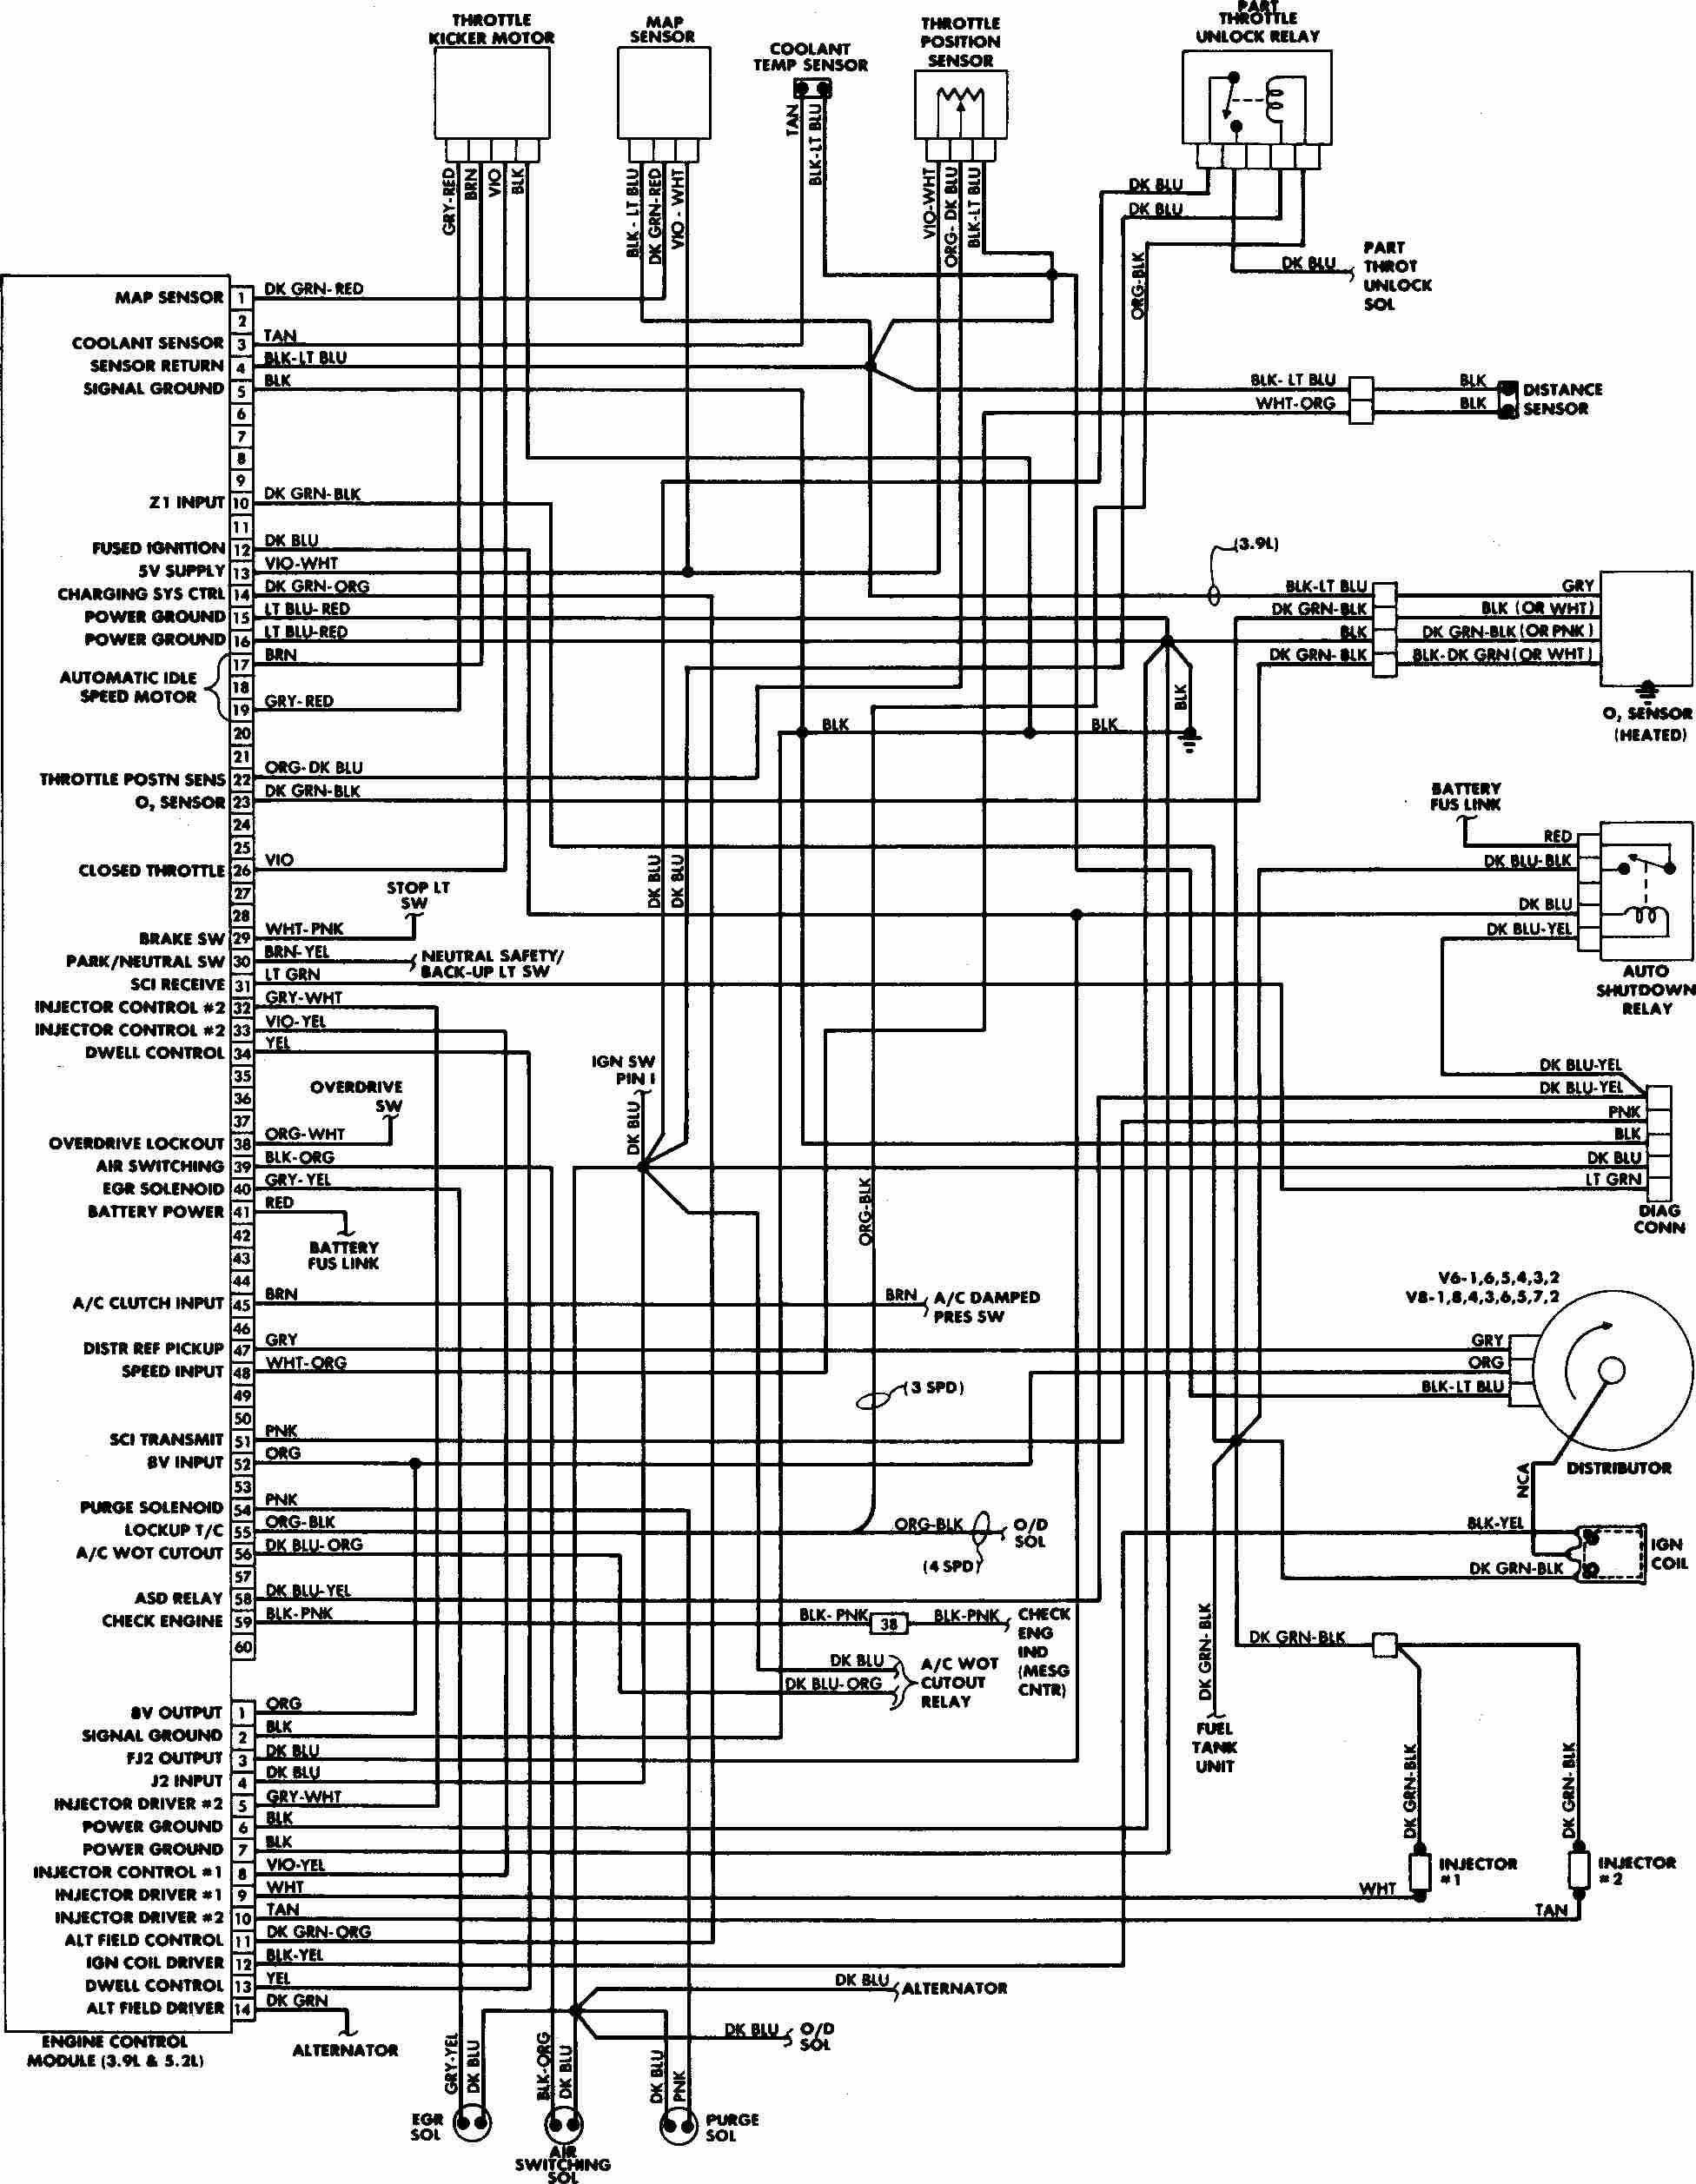 99 grand cherokee 4.7 asd relay wiring diagram